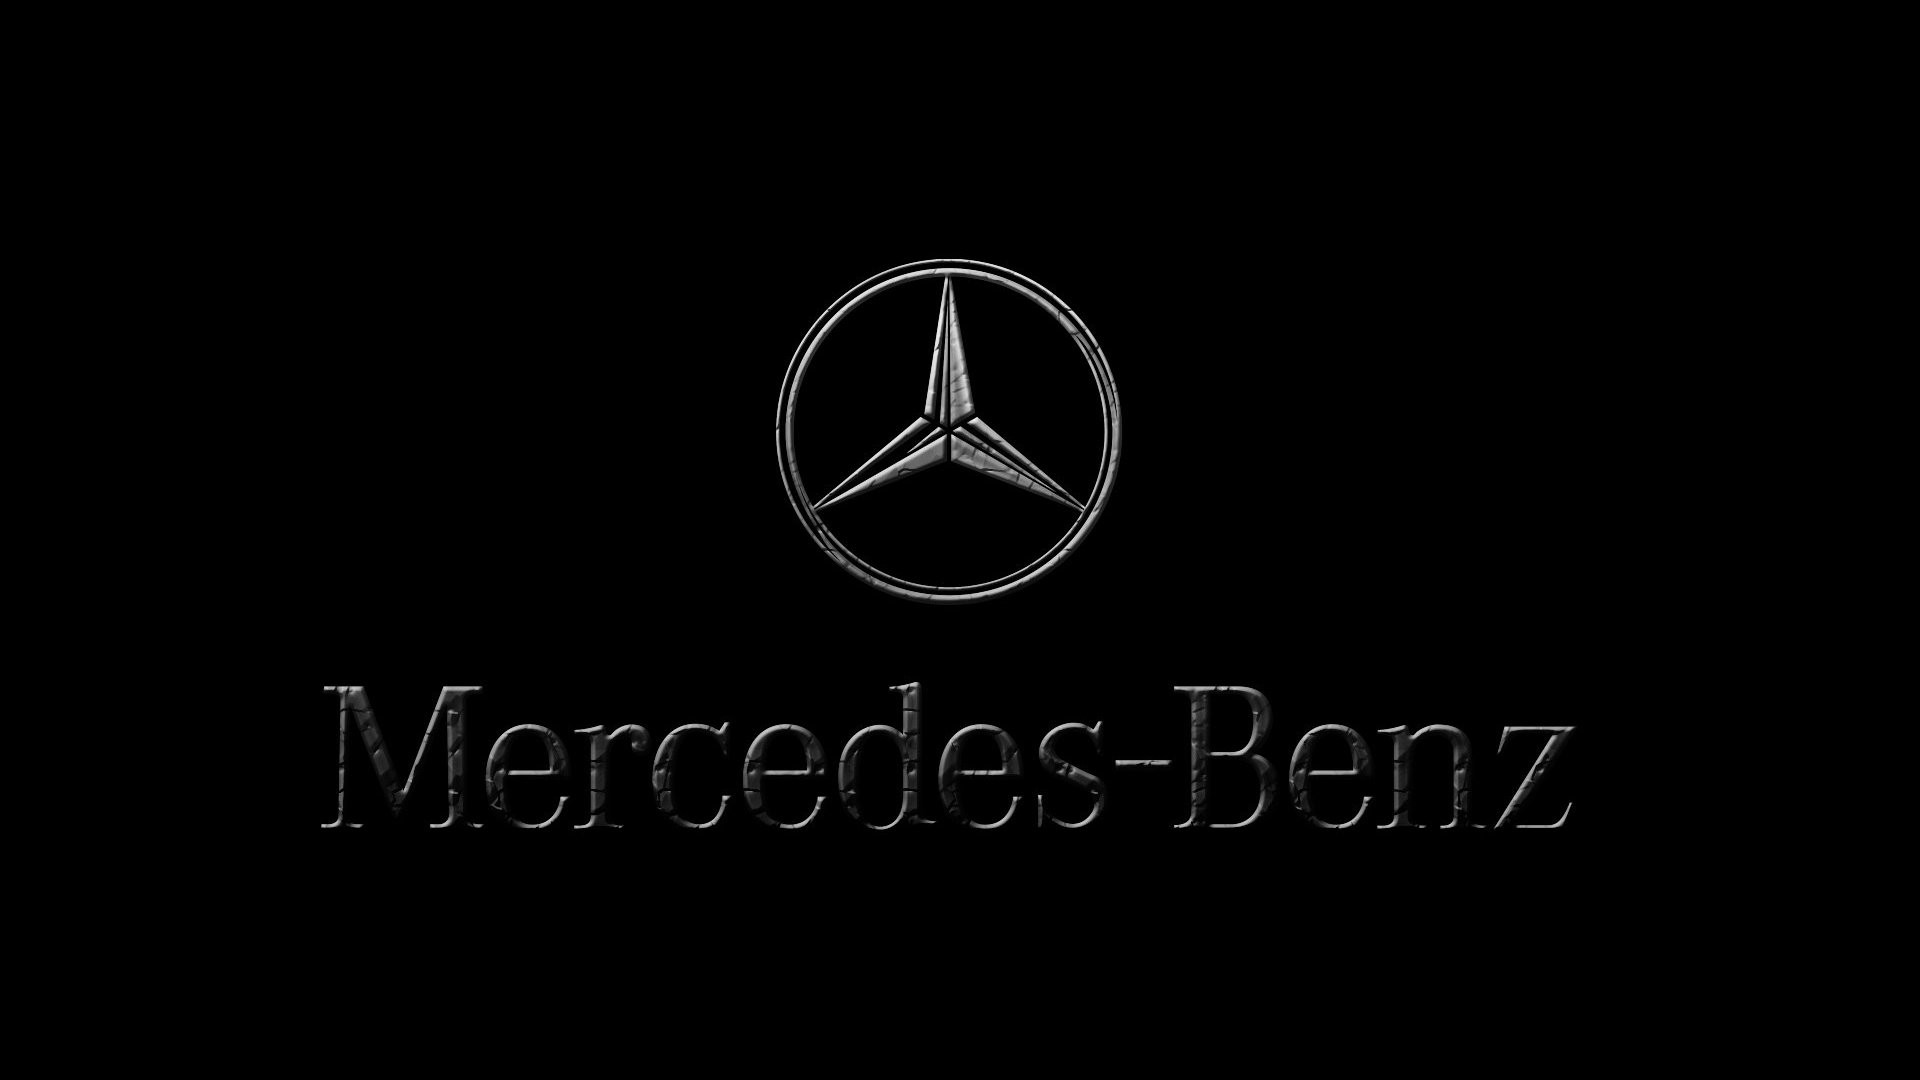 1920x1080 Mercedes Benz Logo Hd Heavenly Wallpaper Free Download Mercedes Benz Logo  Hd Heavenly Wallpaper